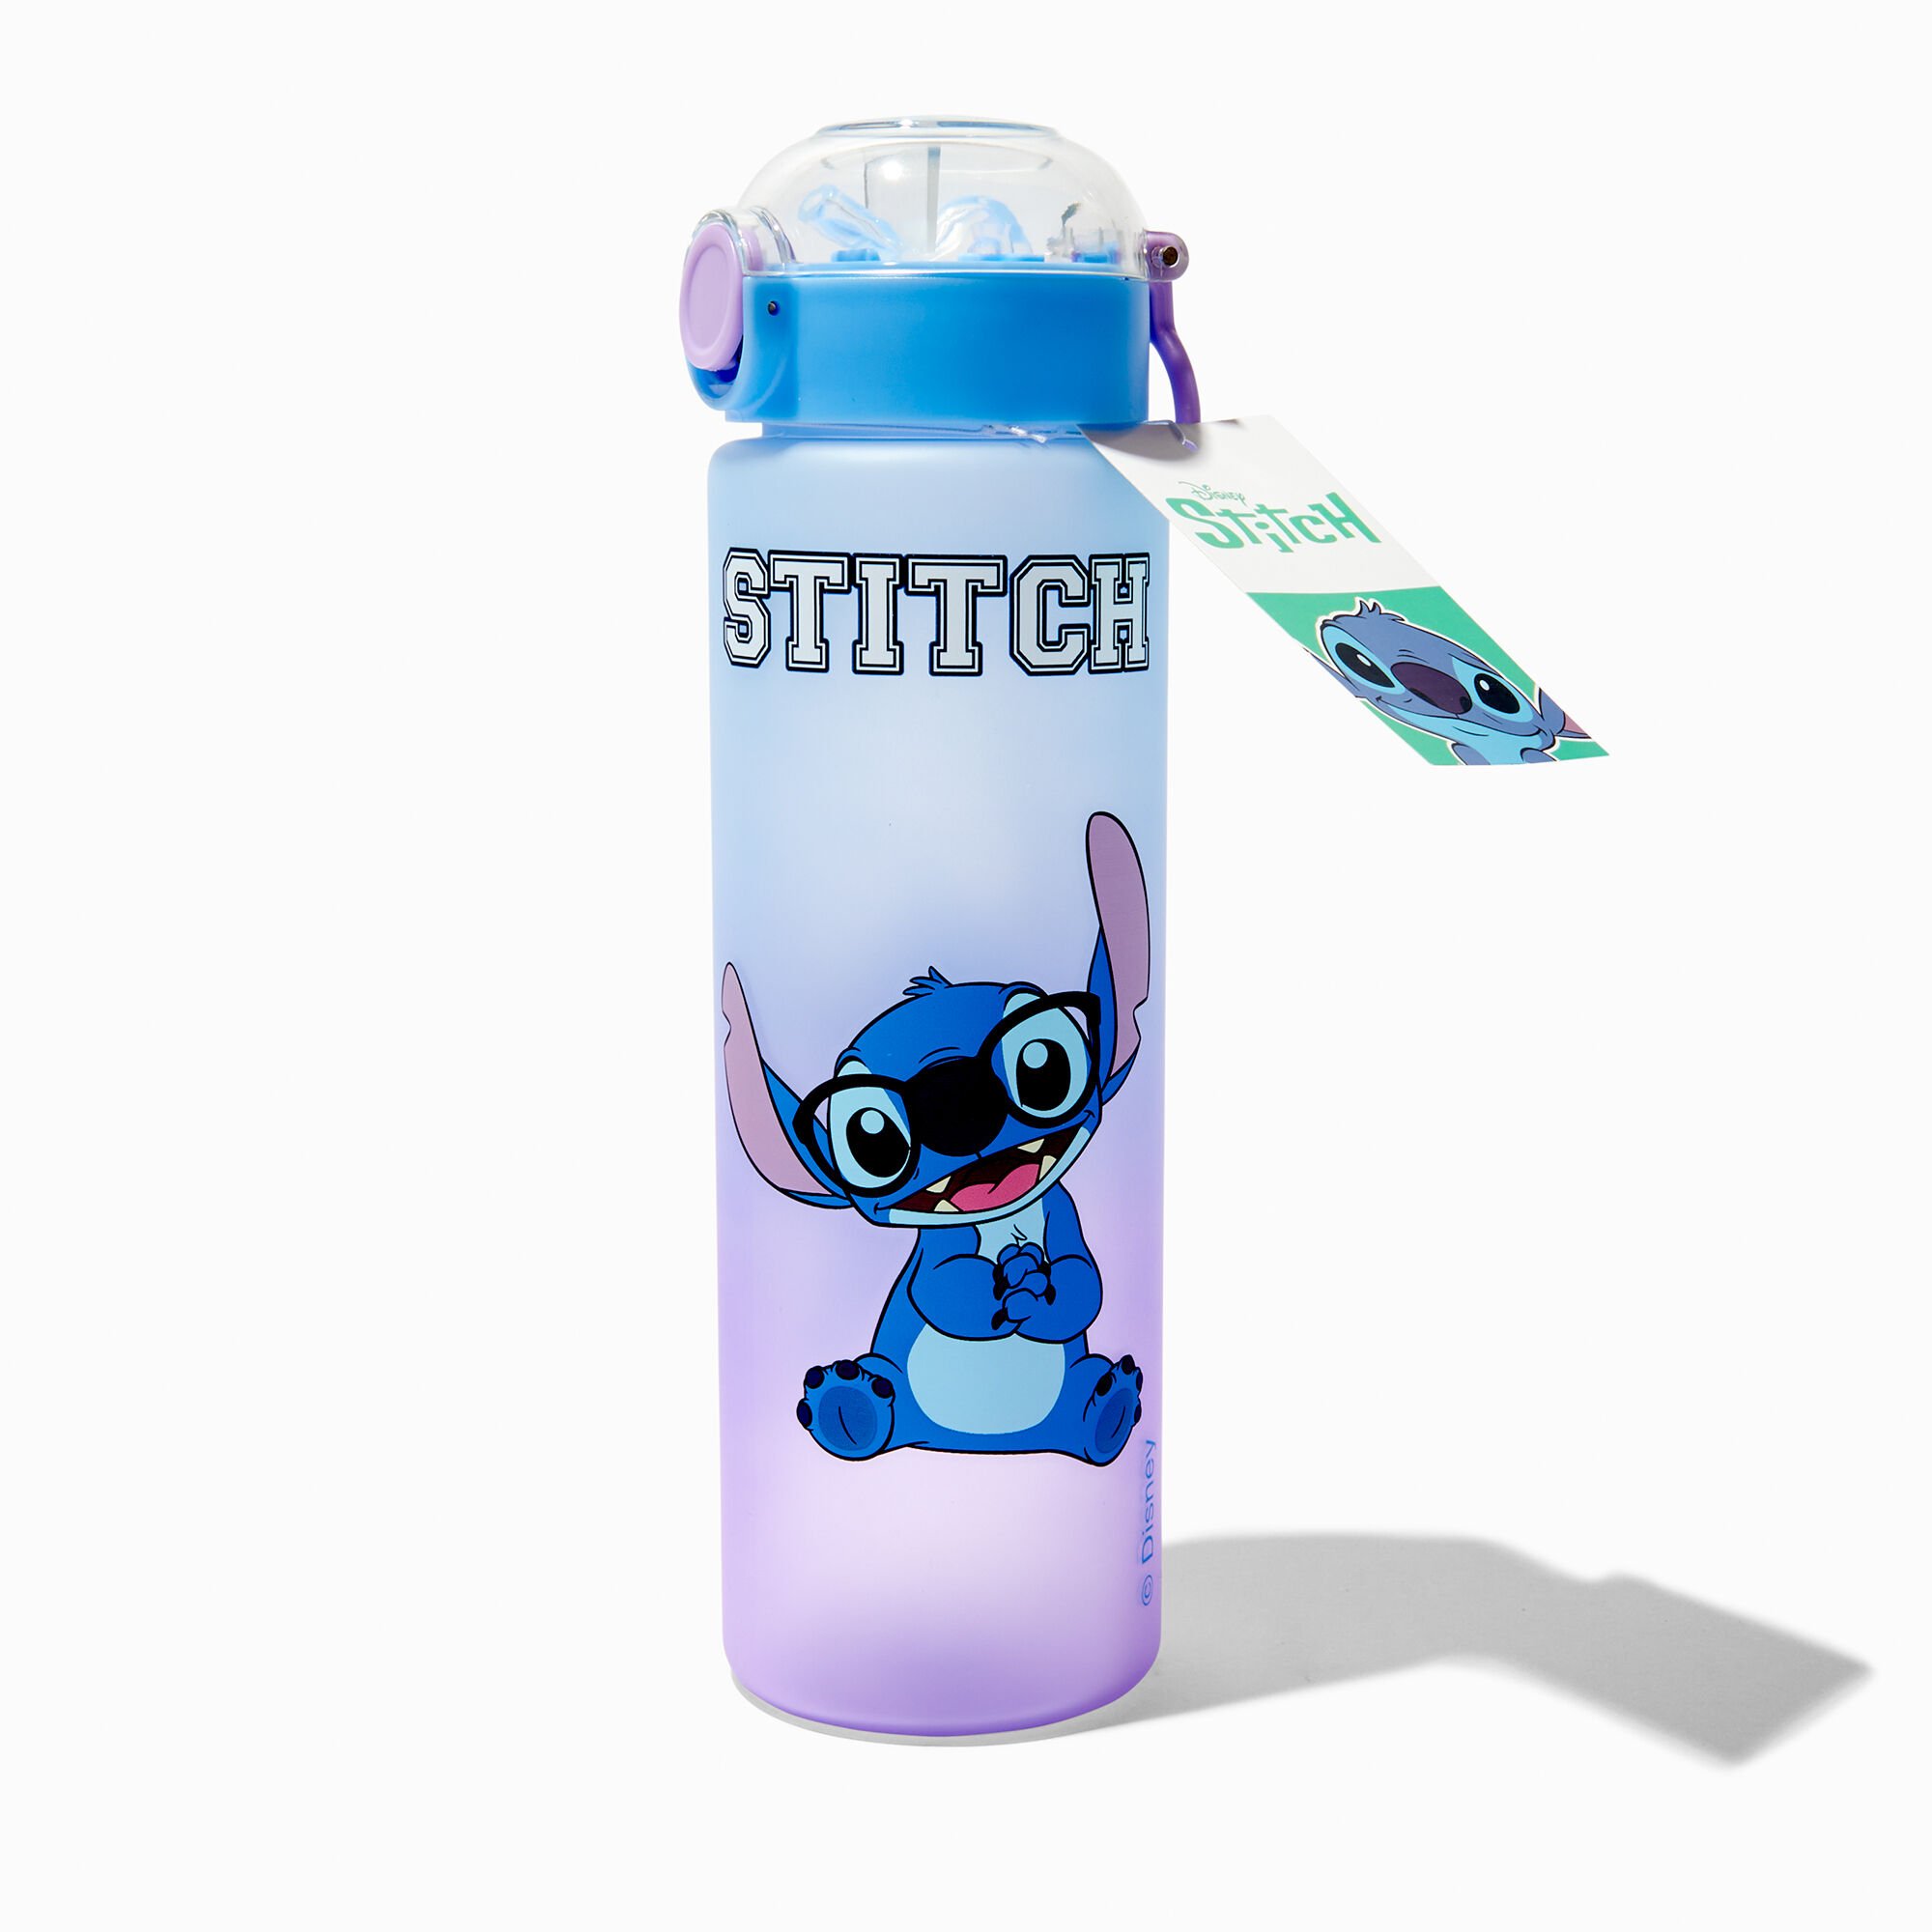 View Claires Disney Stitch Water Bottle information